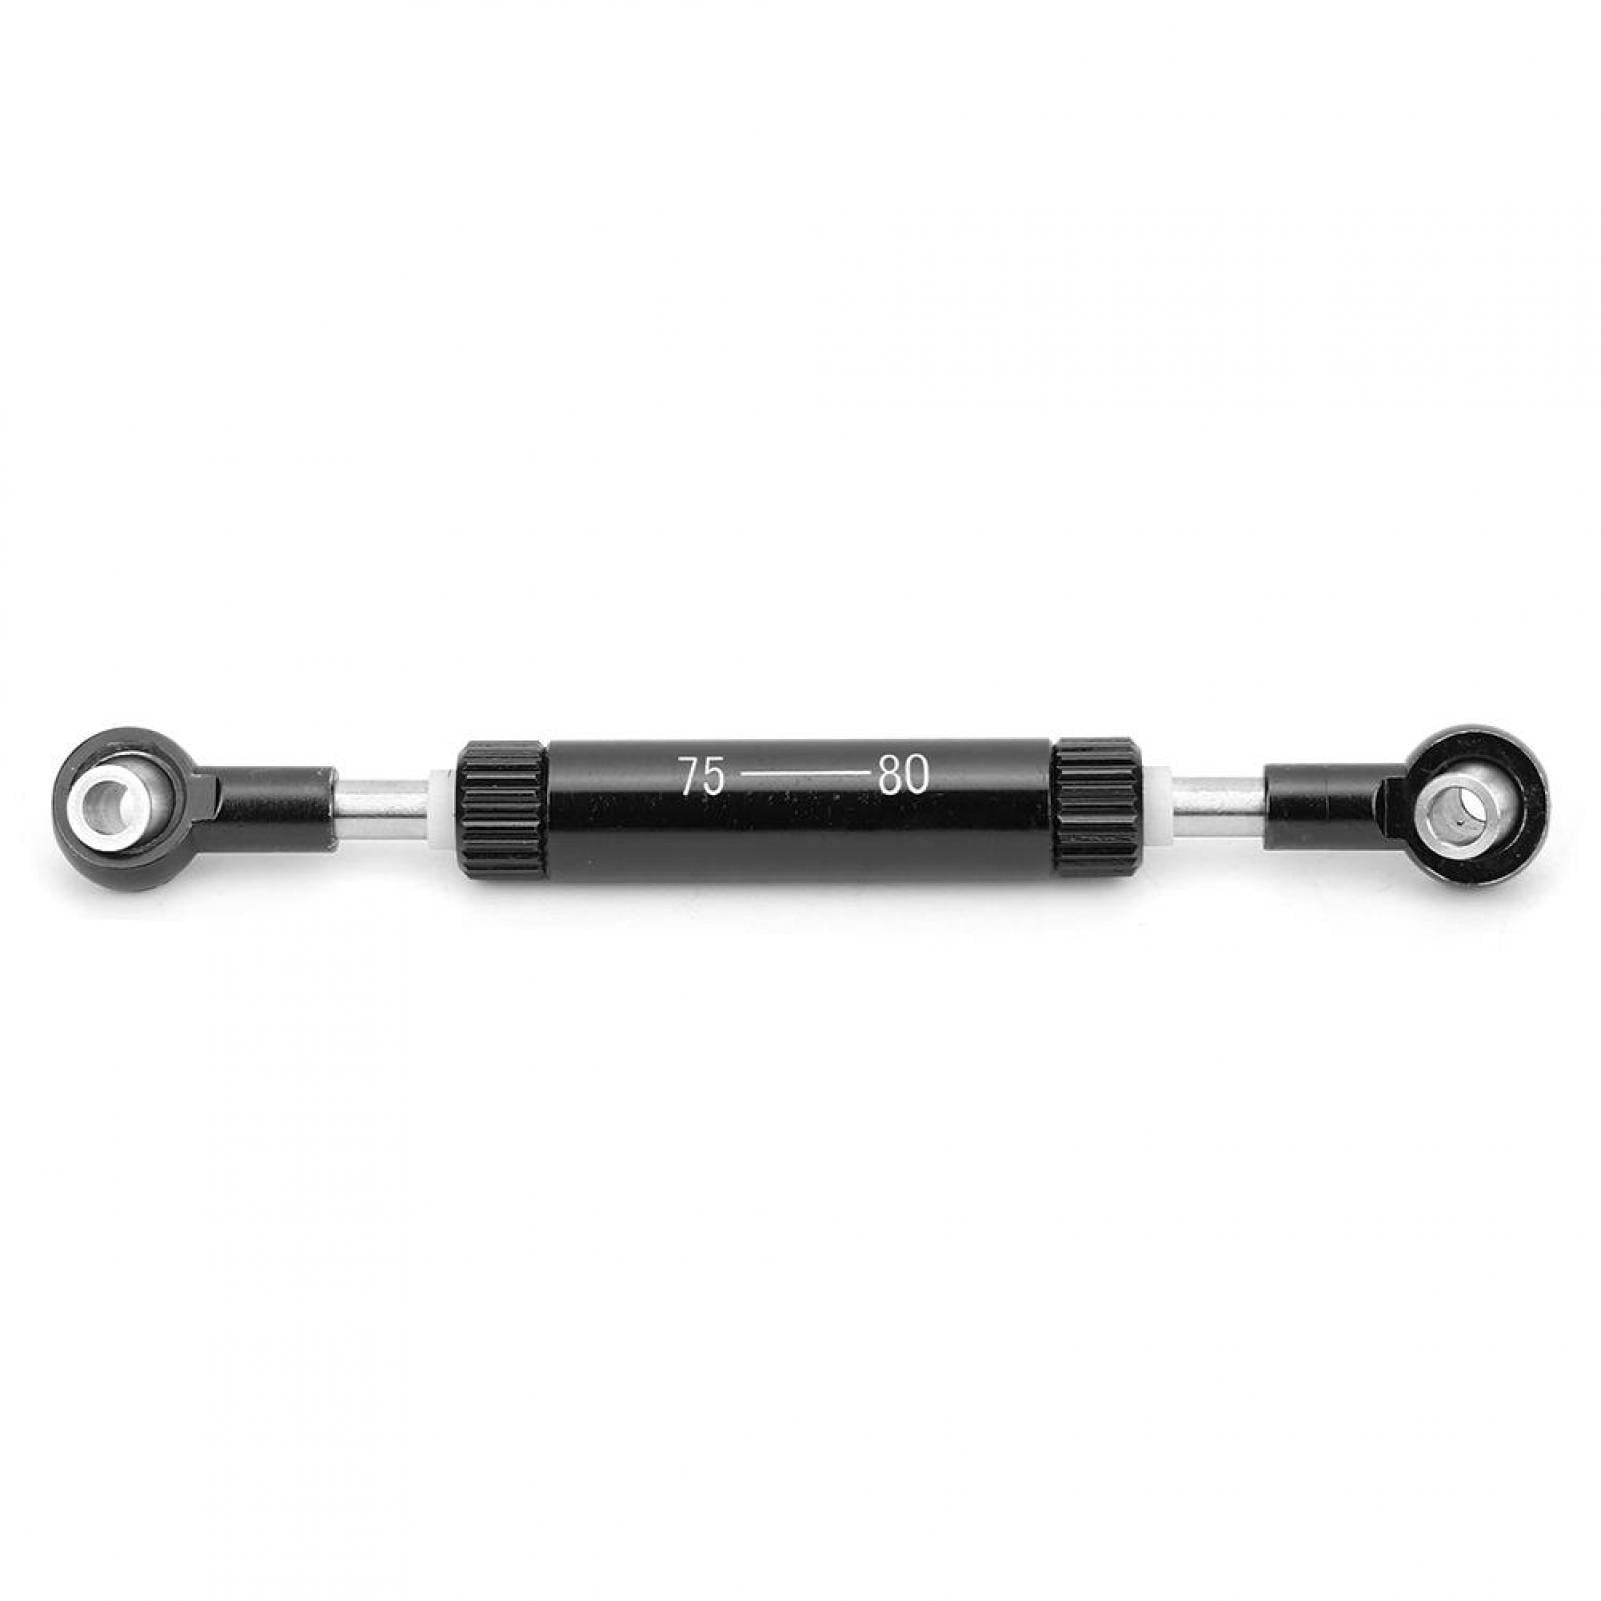 Adjustable Servos Pull Rod-steering Lever Accessory for Scx10 D90 1/10 RC Car for sale online